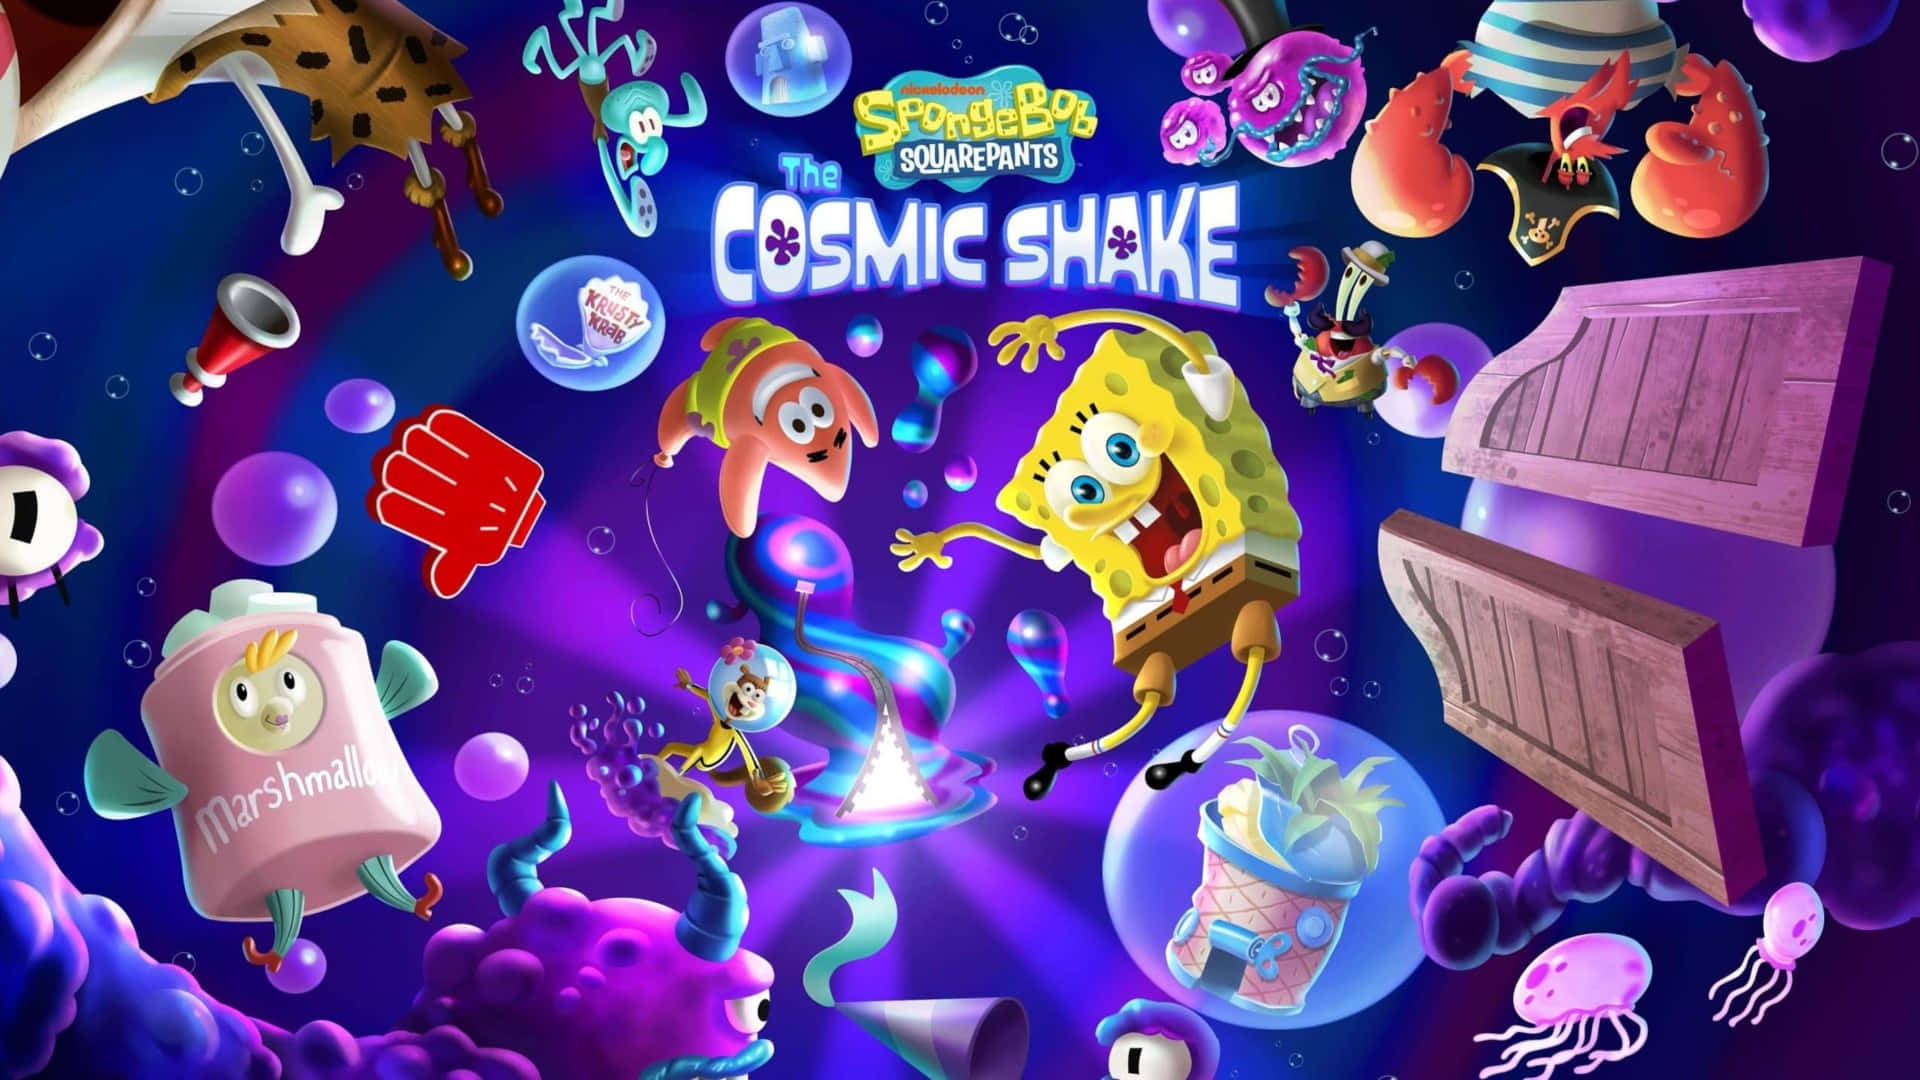 Spongebob Squarepants Ice Cream Shake Screenshot Wallpaper